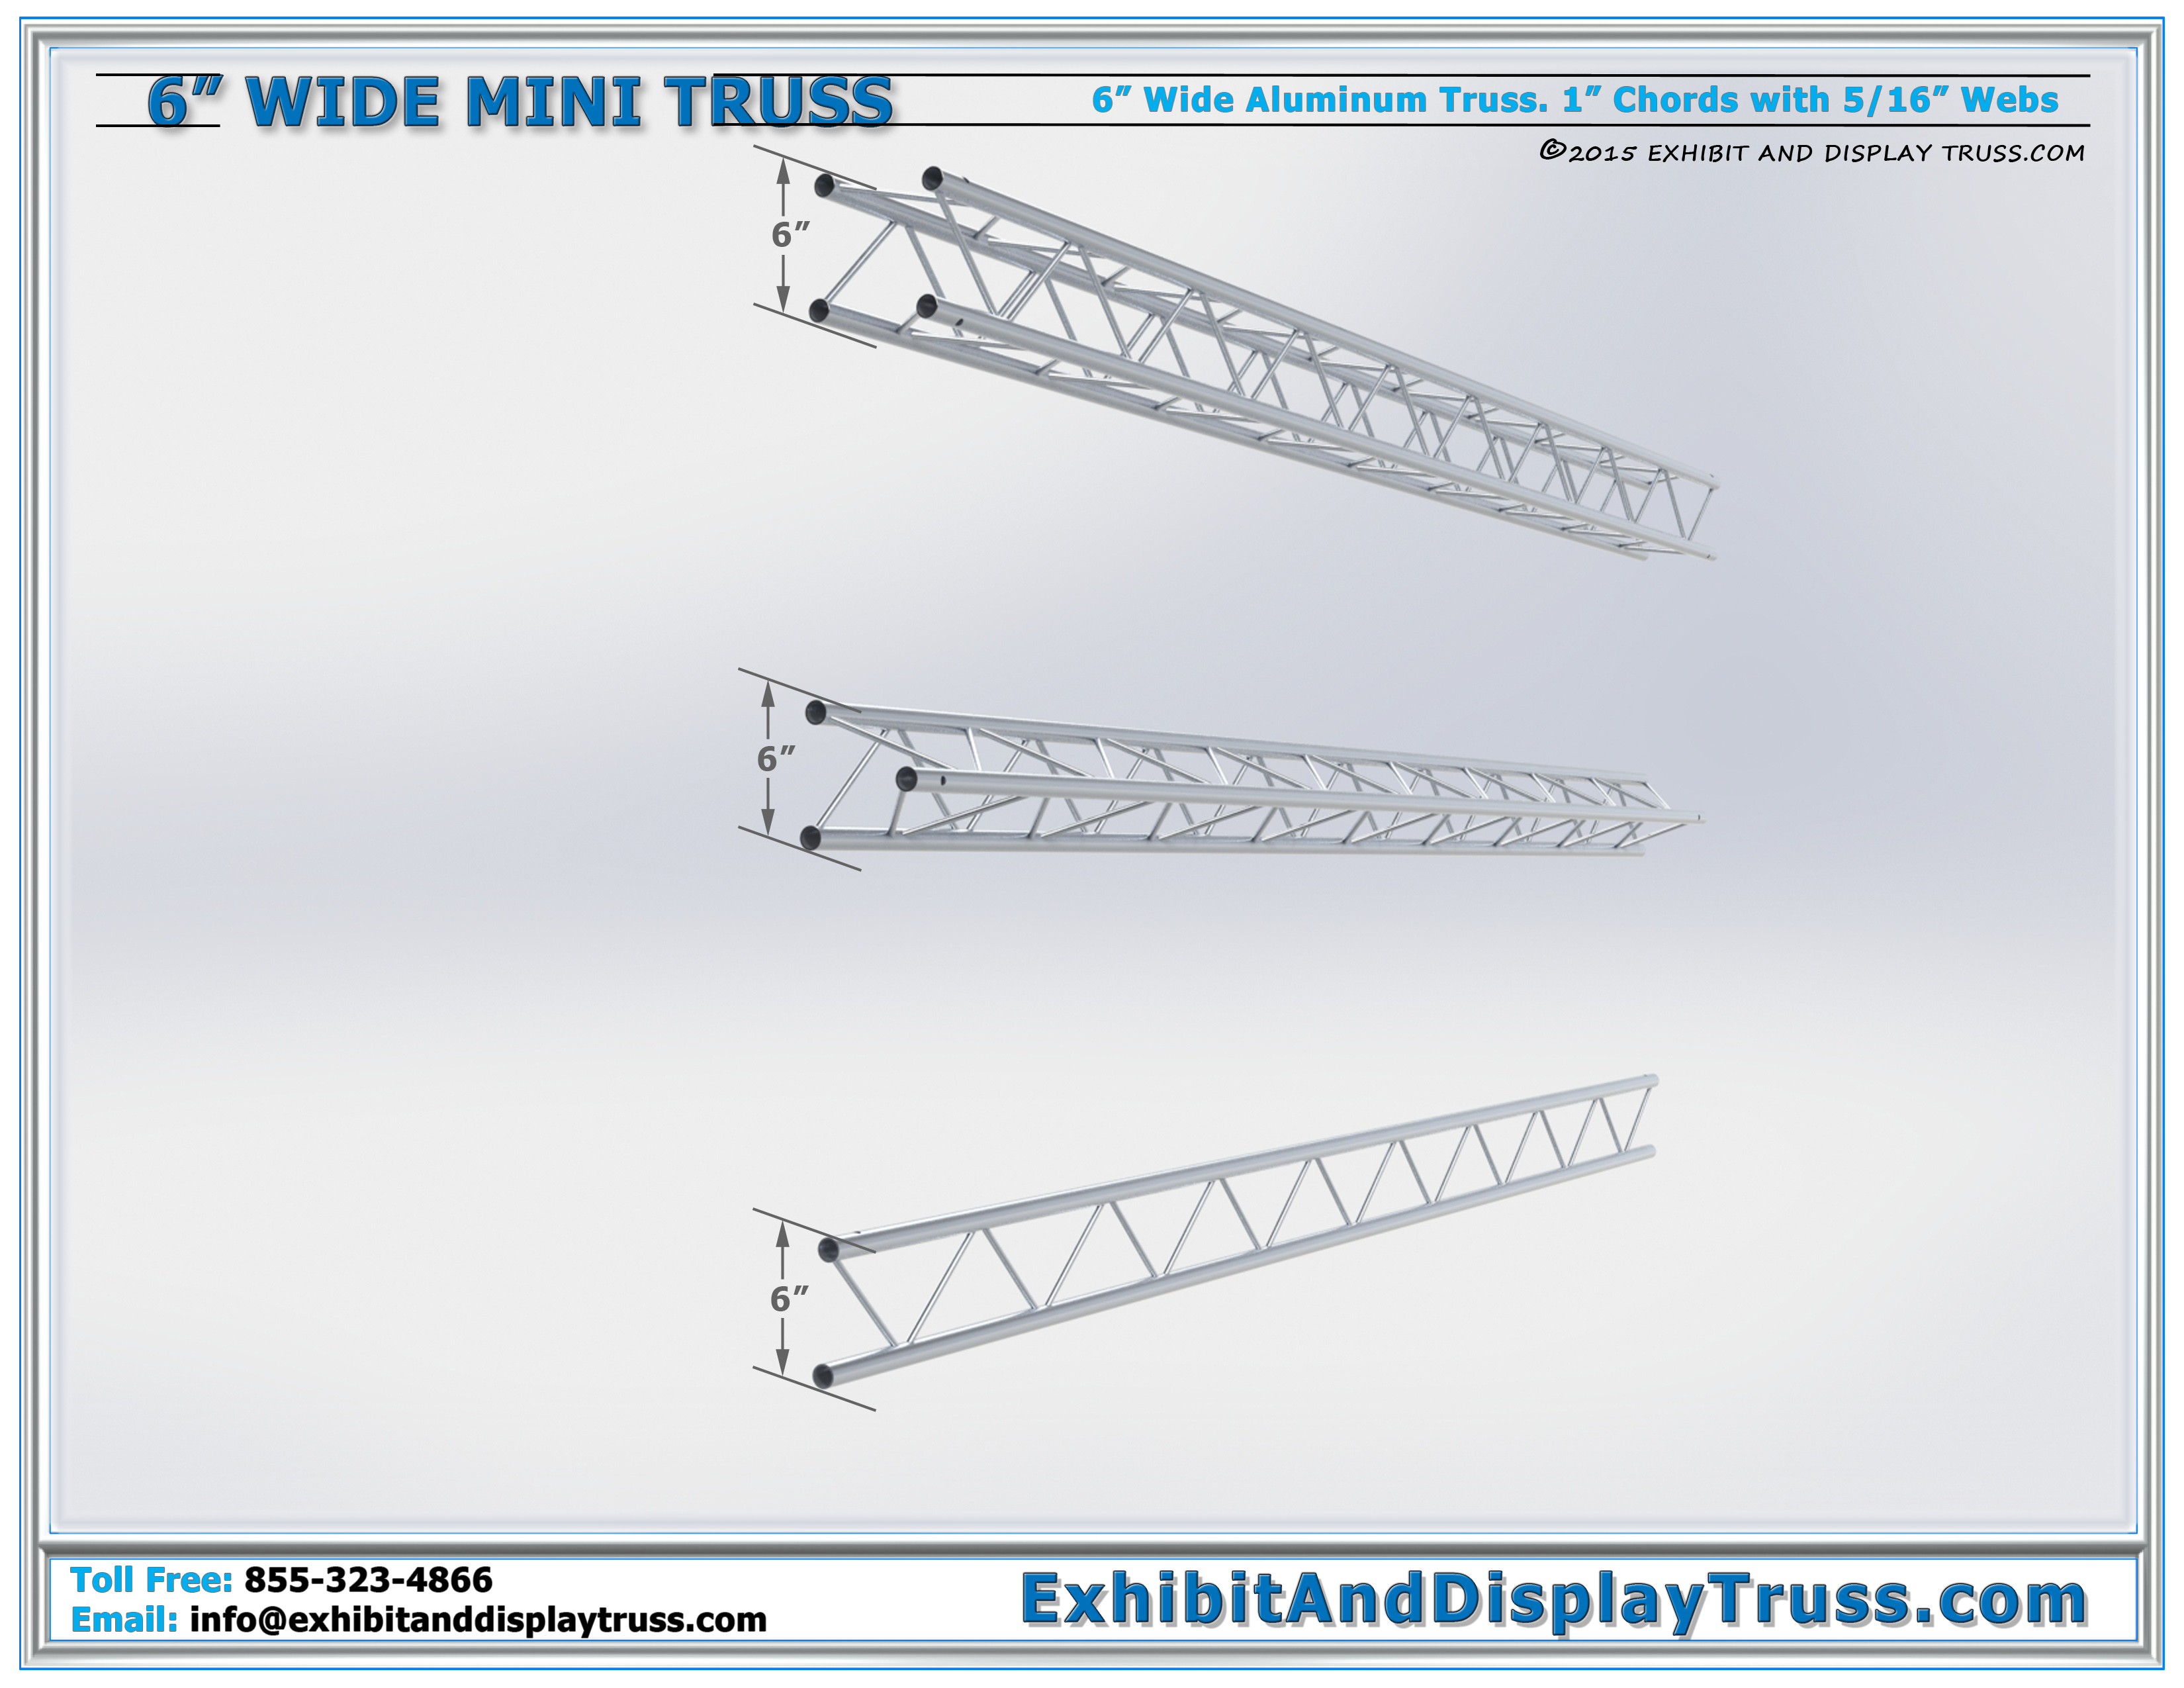 6” Wide Aluminum Truss | Aluminum Mini Truss Stocked In: Box / Square, Triangle and Flat / Ladder